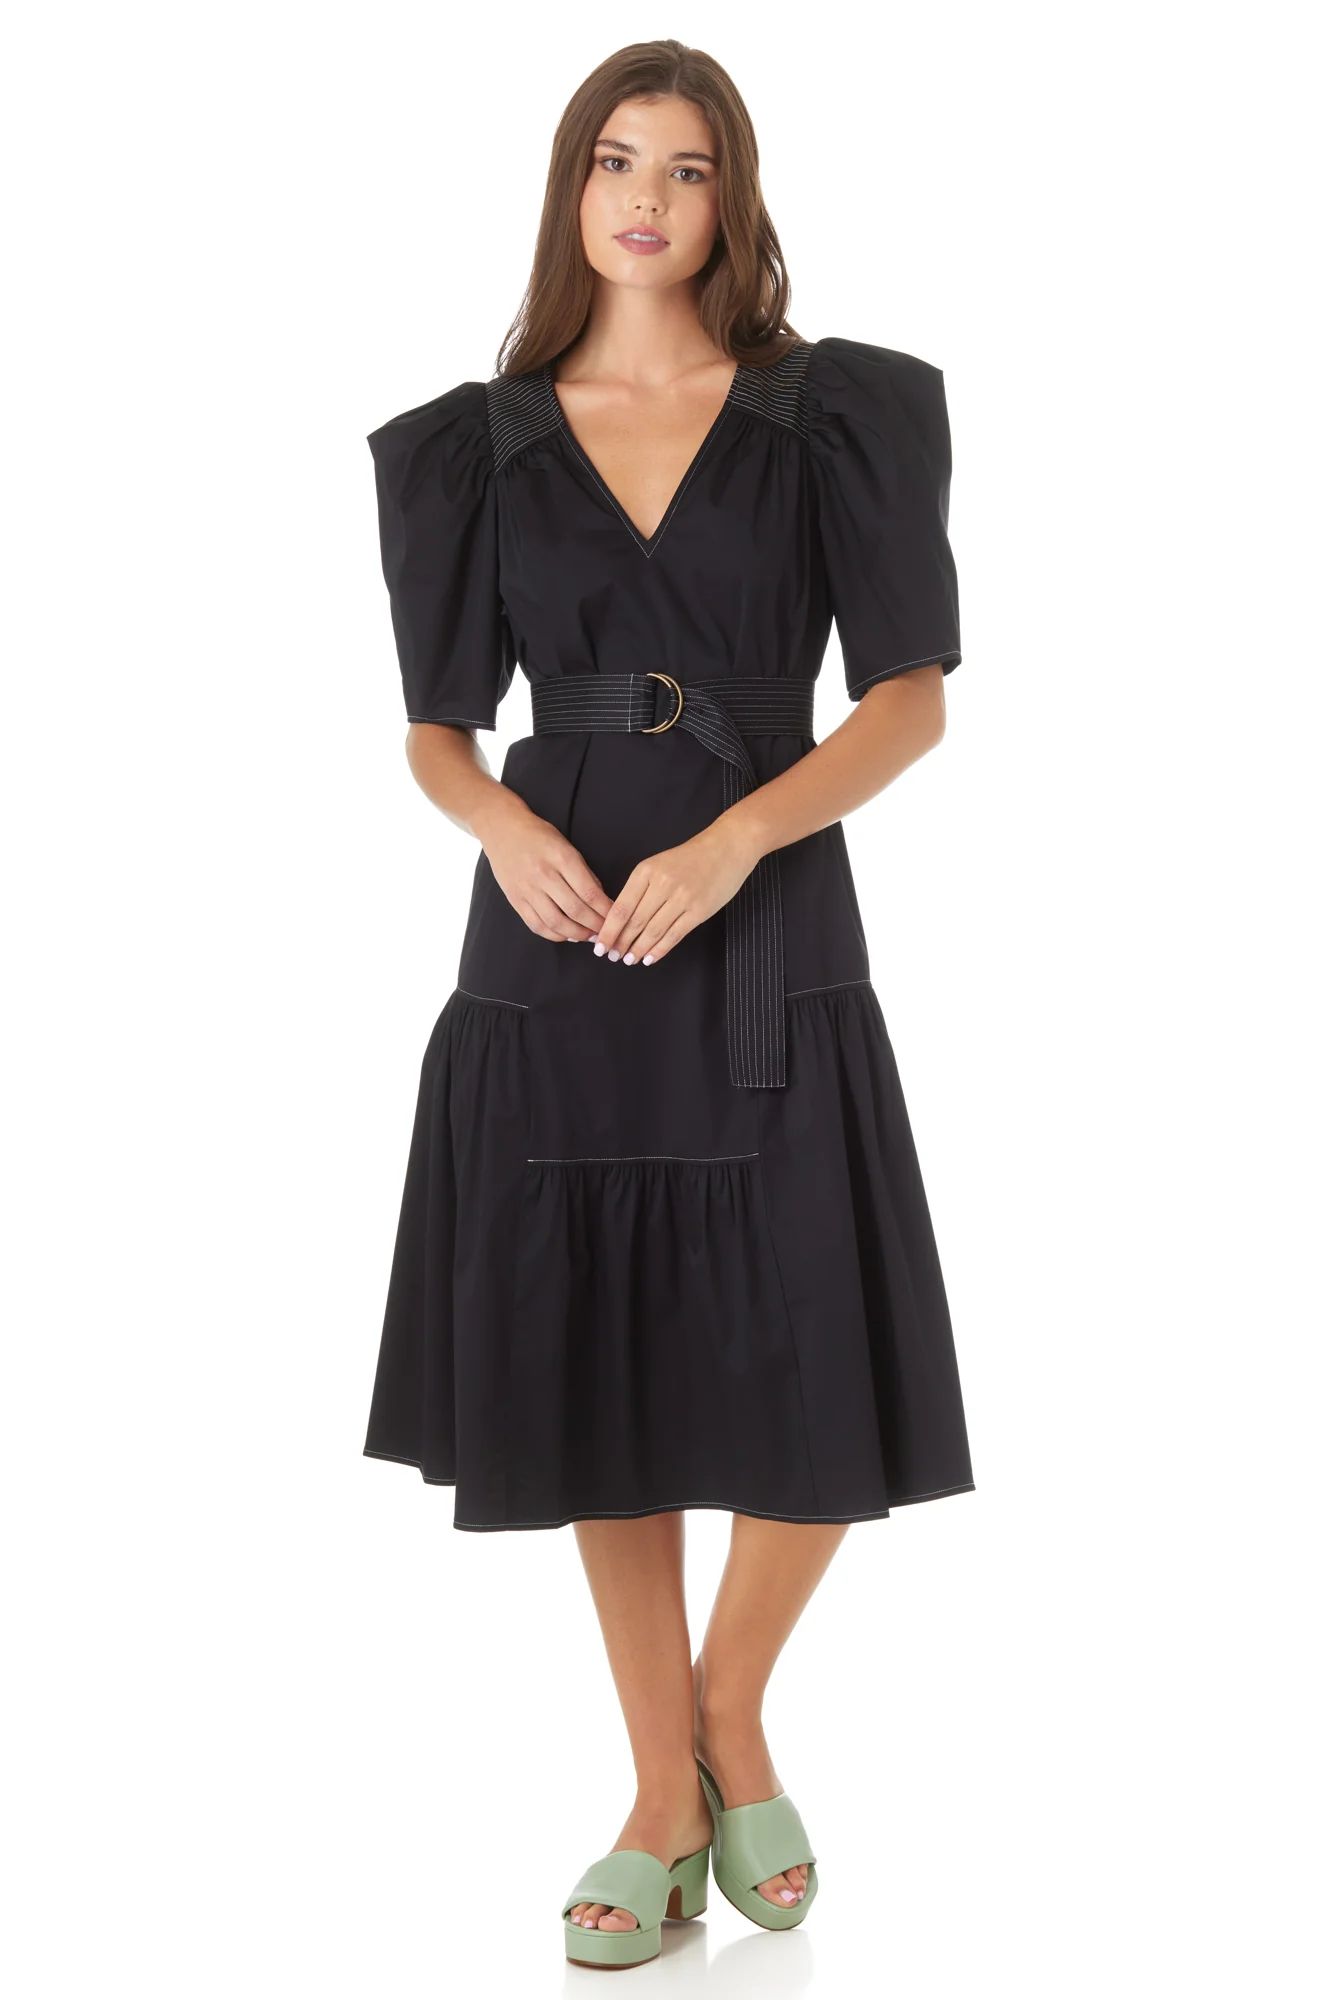 Odell Dress in Black | CROSBY by Mollie Burch | CROSBY by Mollie Burch